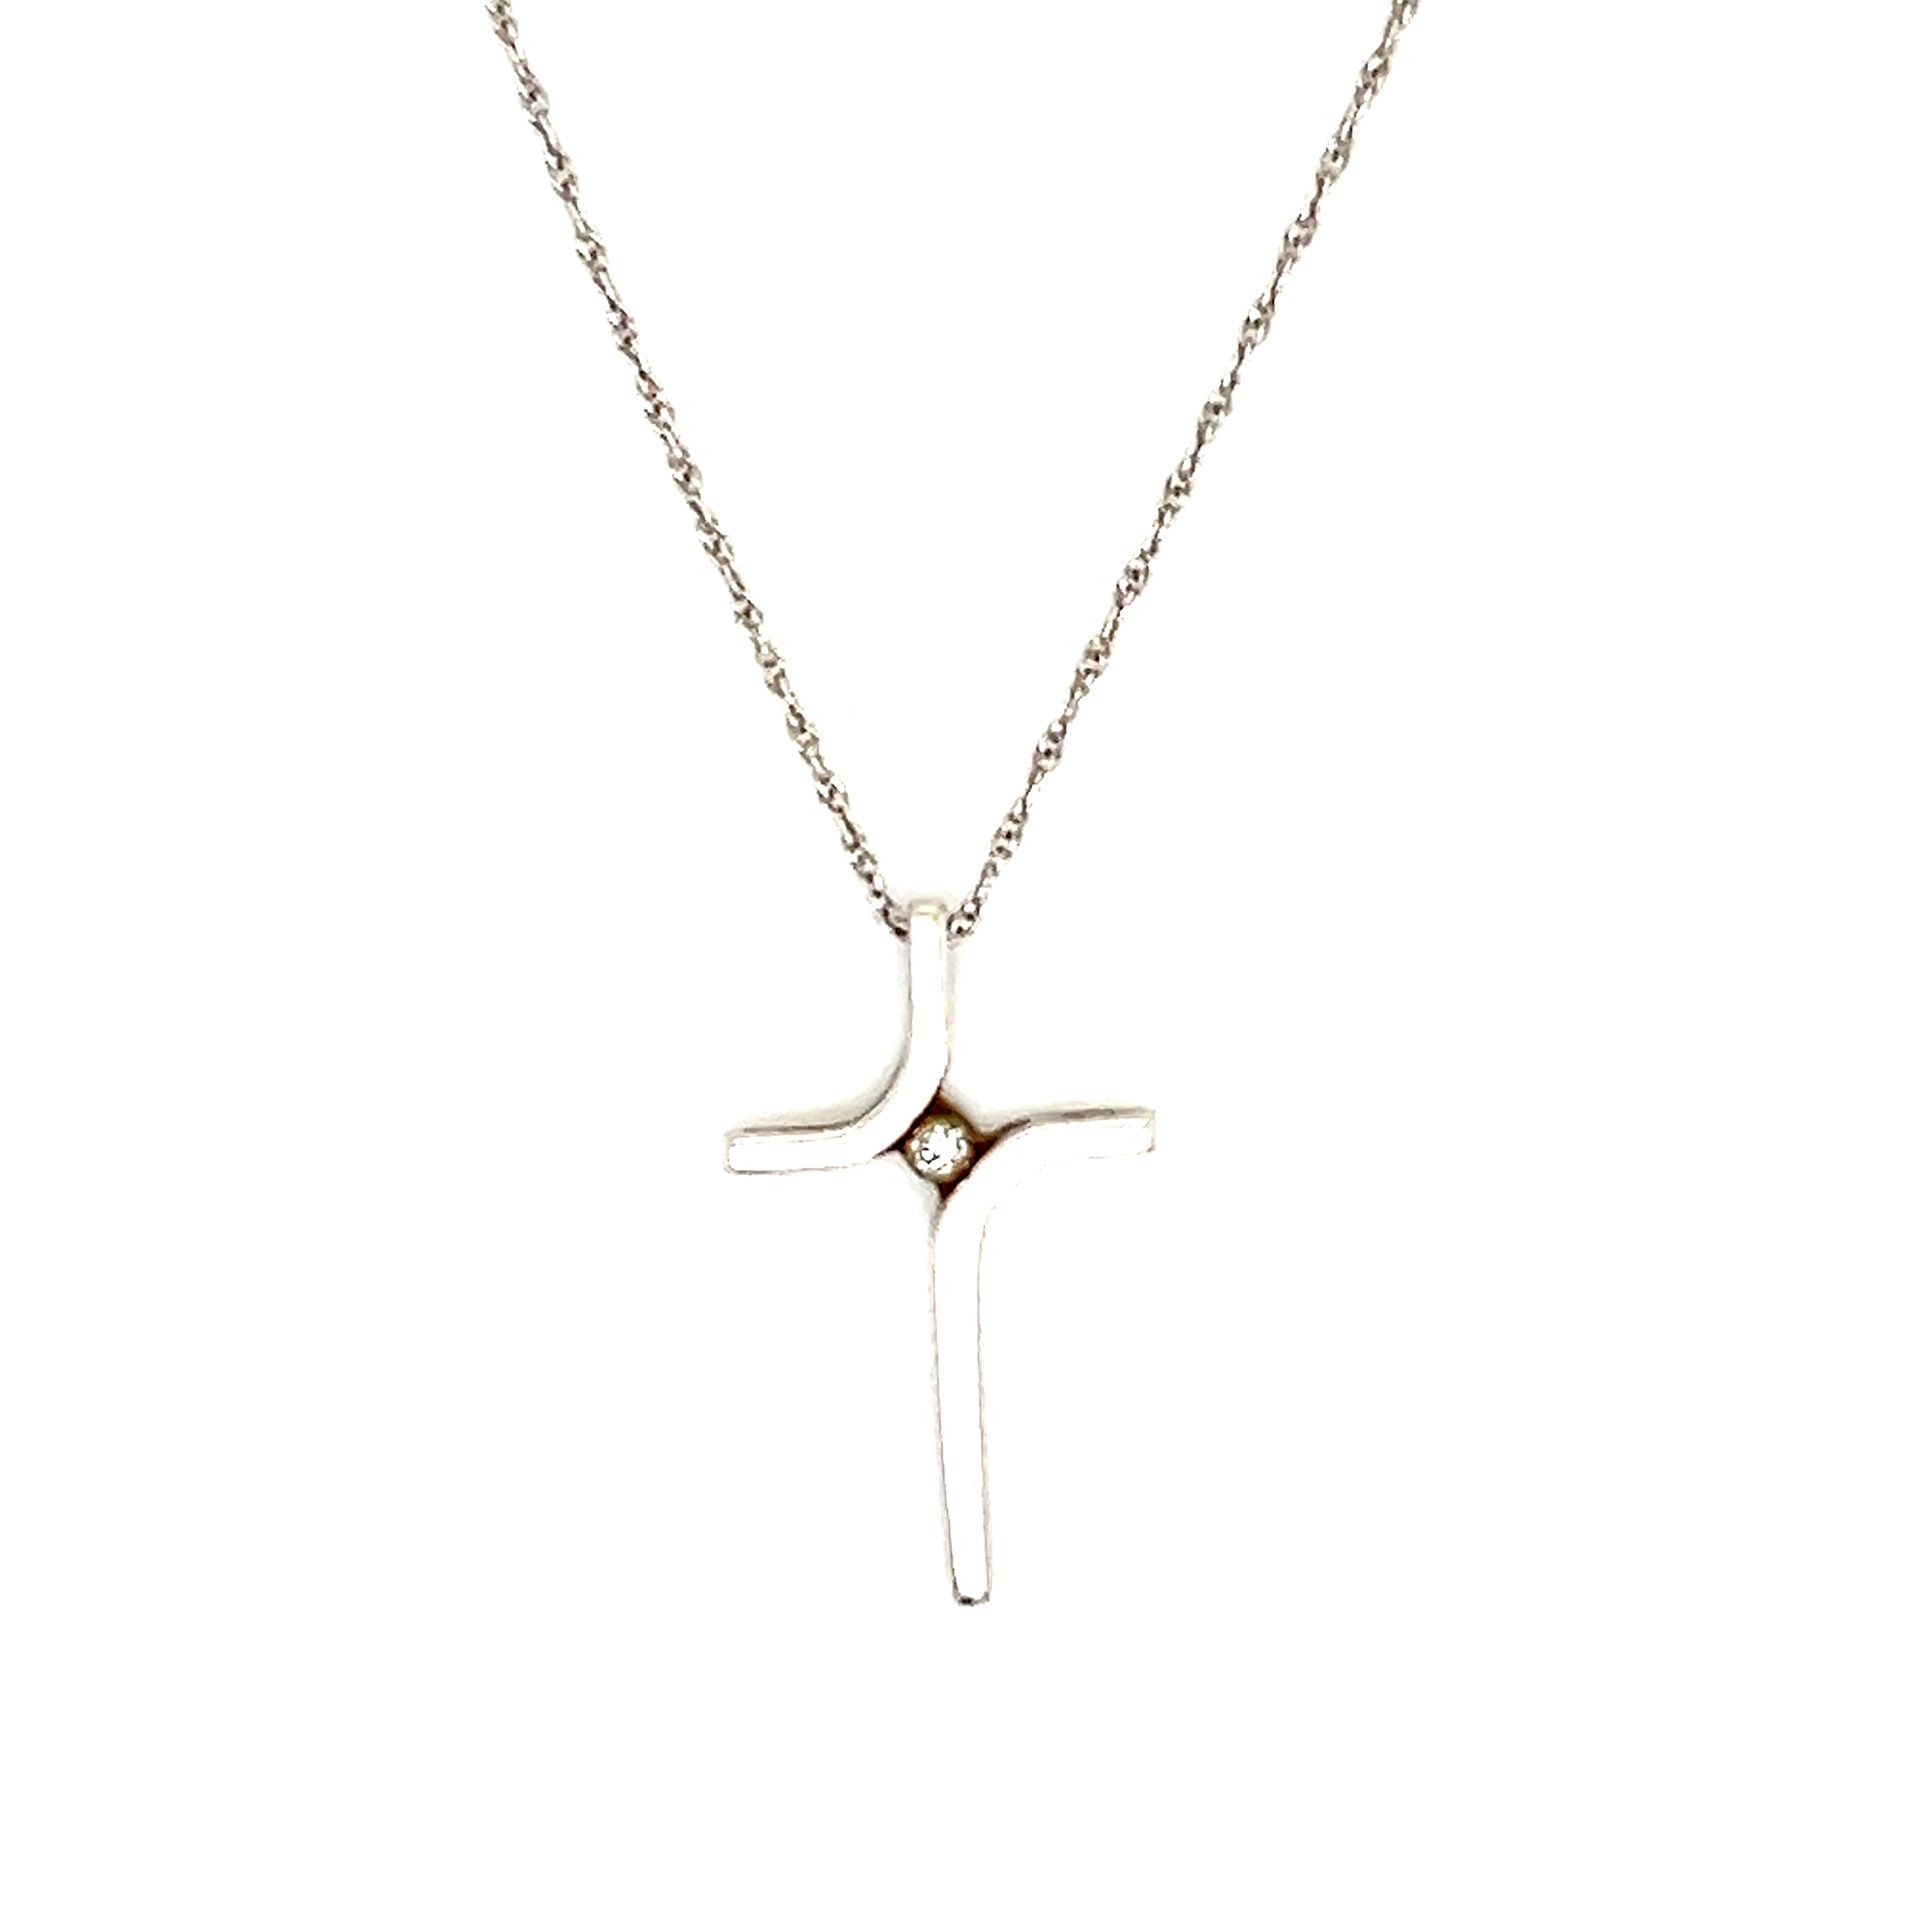 Delicate 10k Gold Diamond Cross Necklace